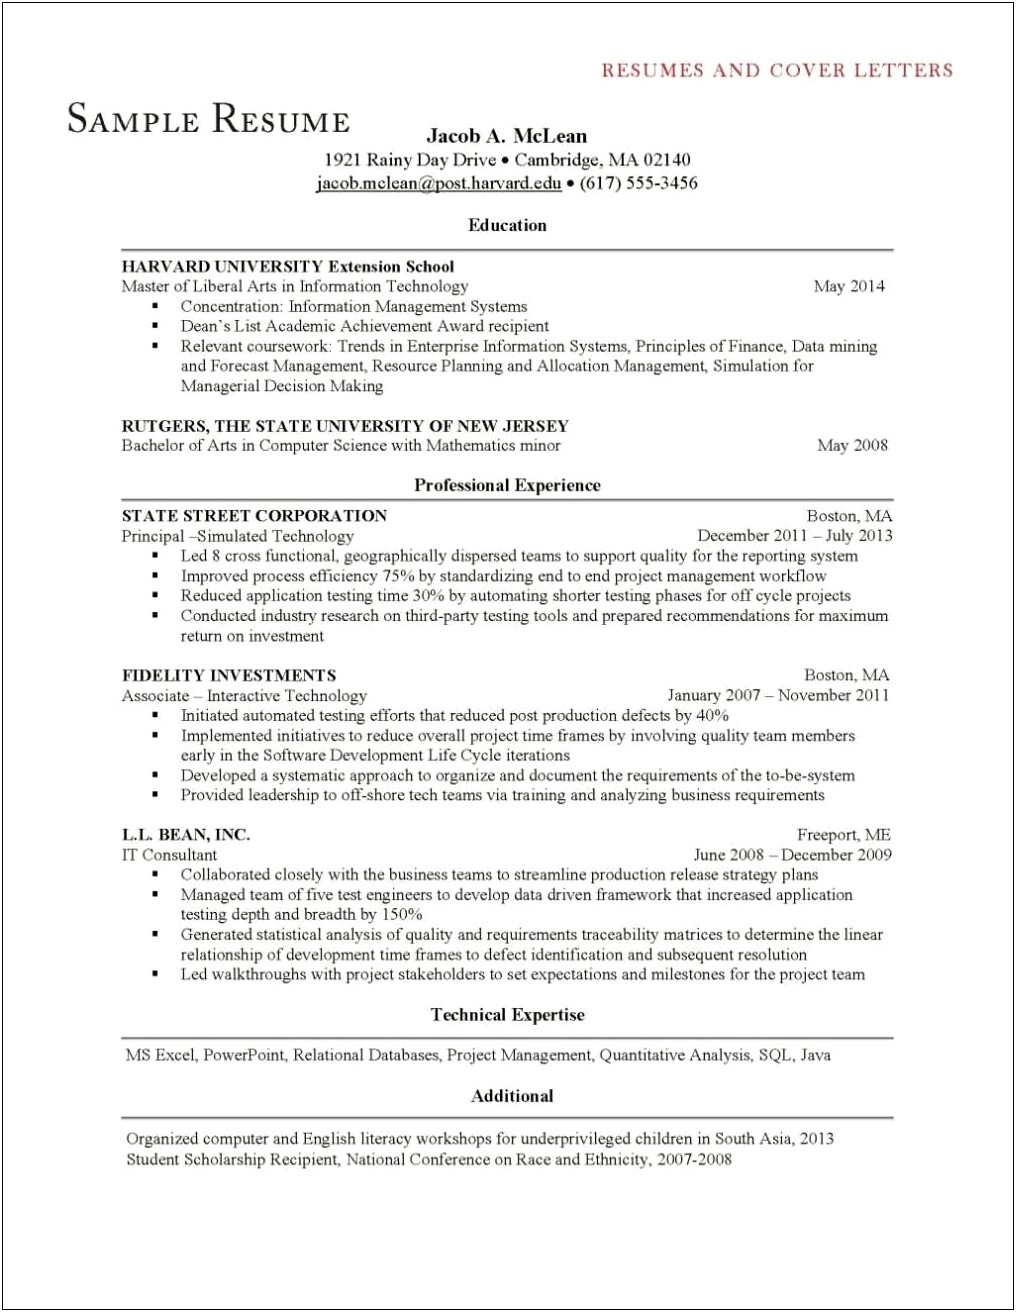 Harvard Business School Sample Resume